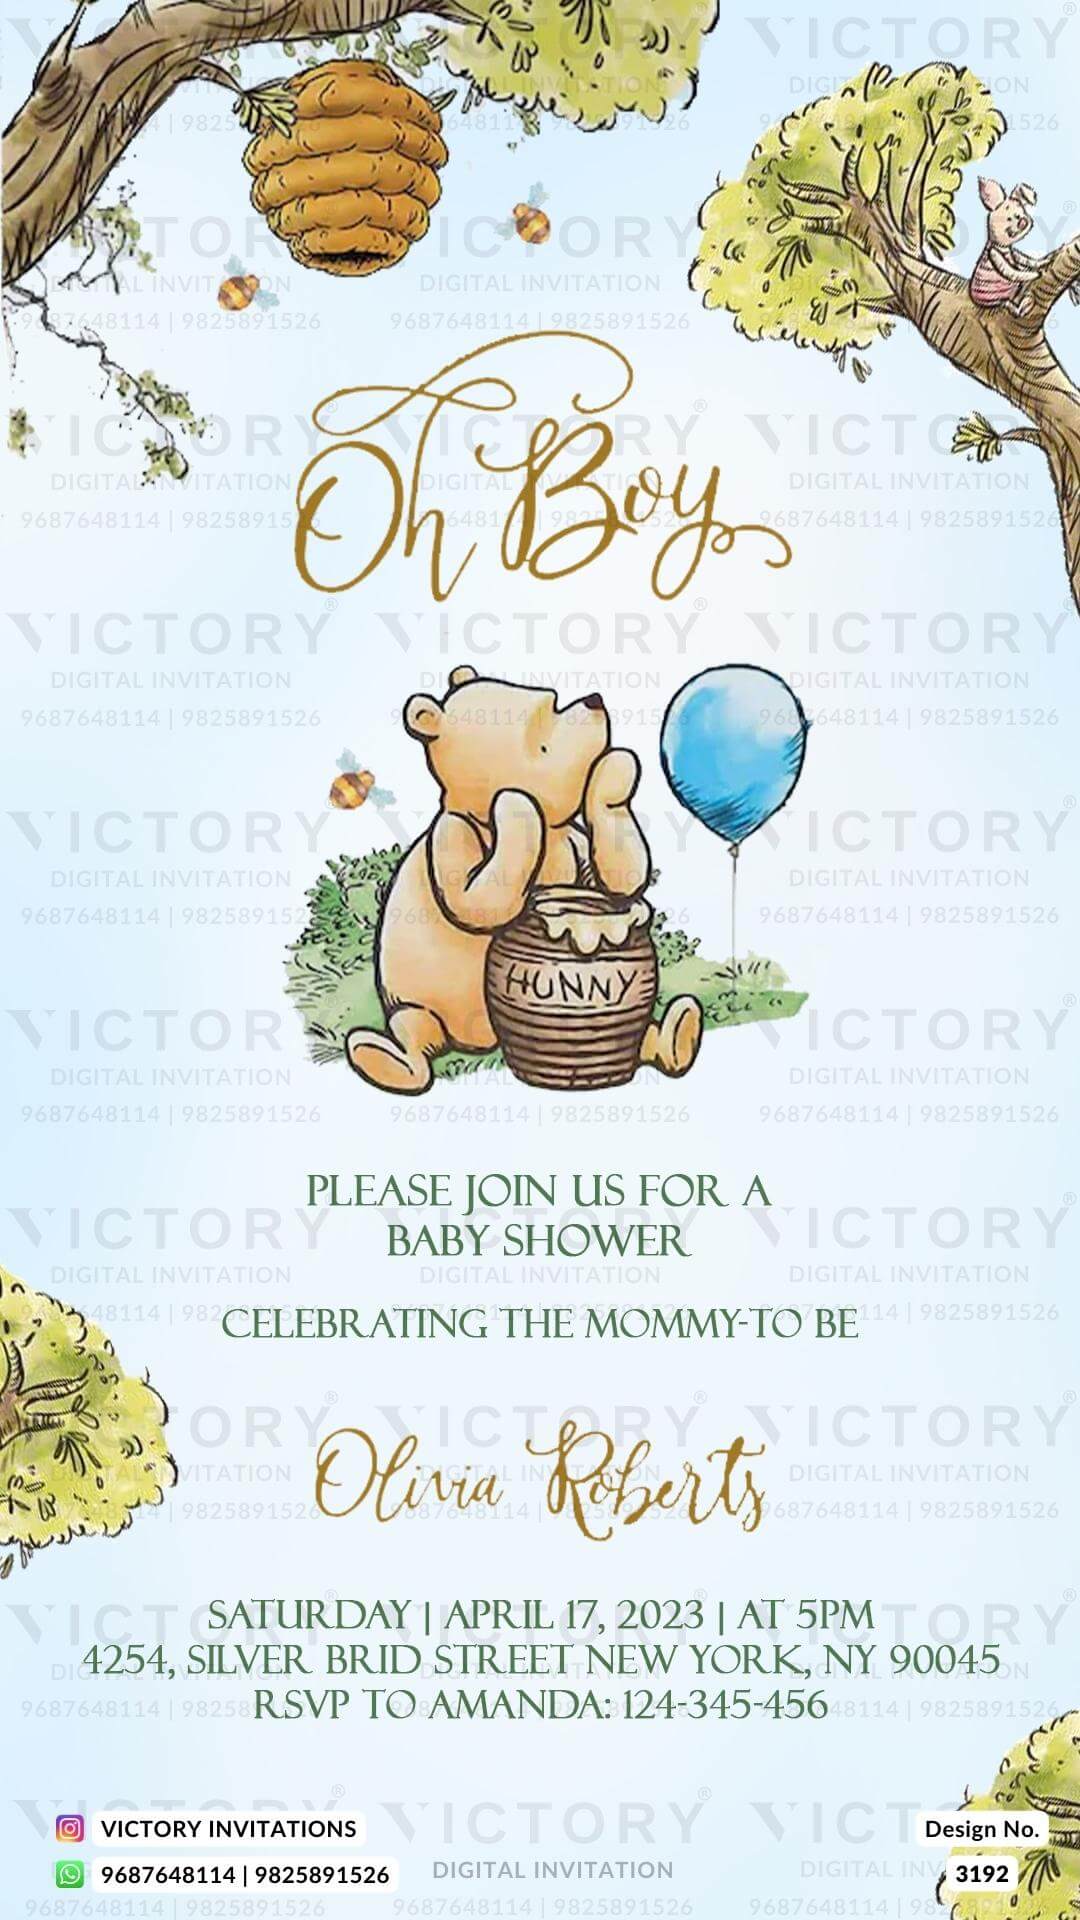 Baby Shower digital invitation card in english design no.3192